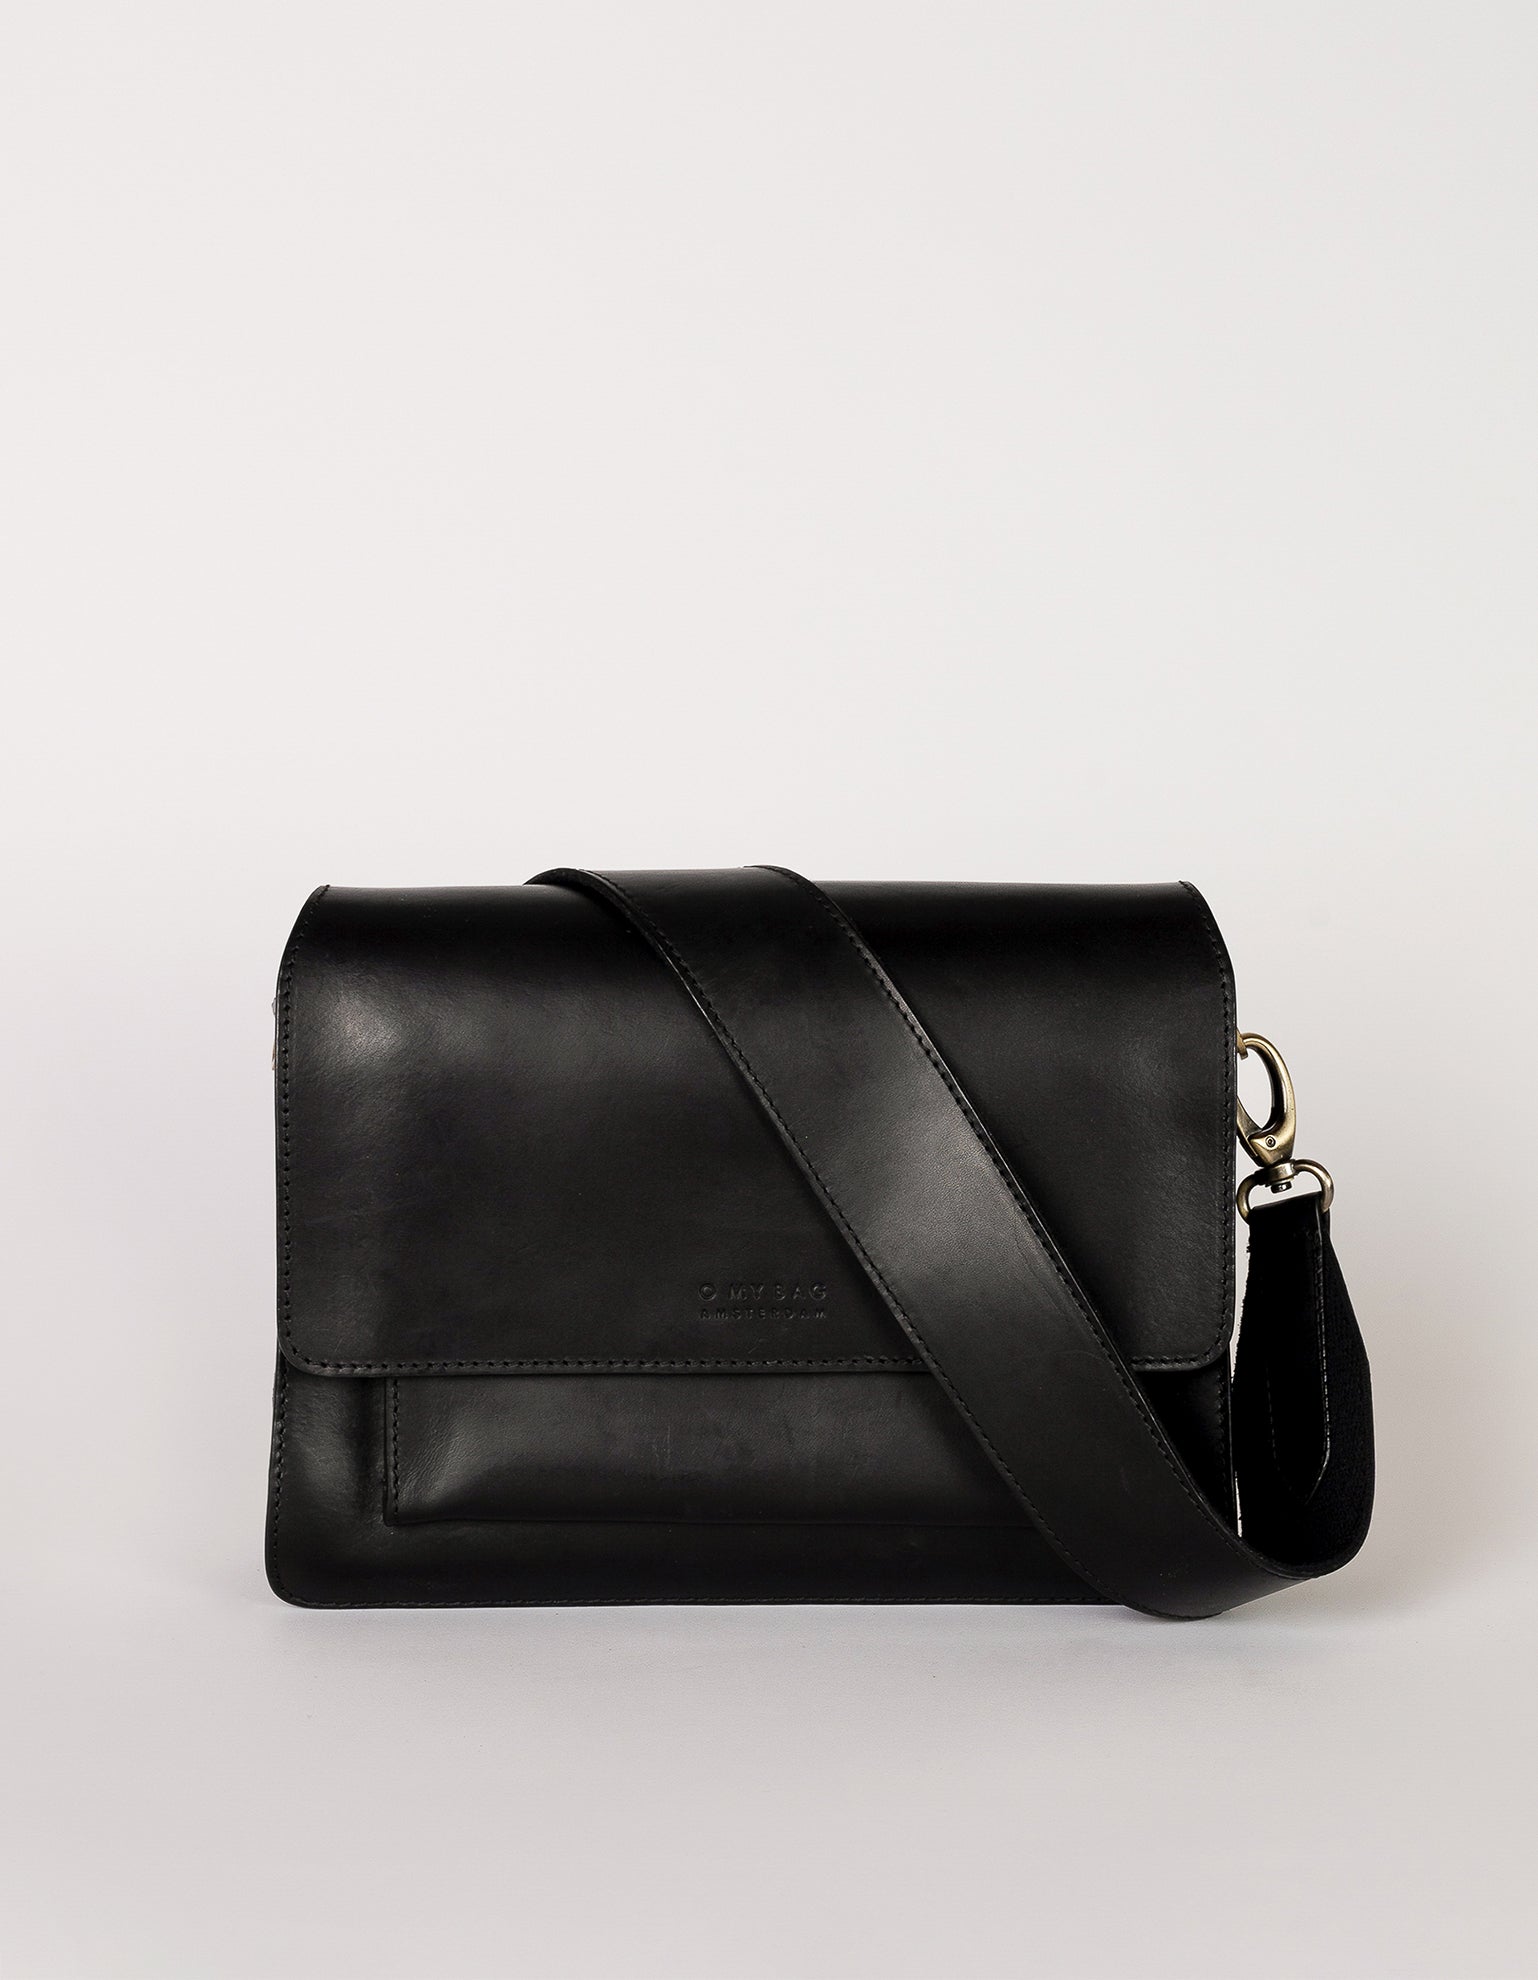 Harper Black Leather crossbody handbag. Front product image